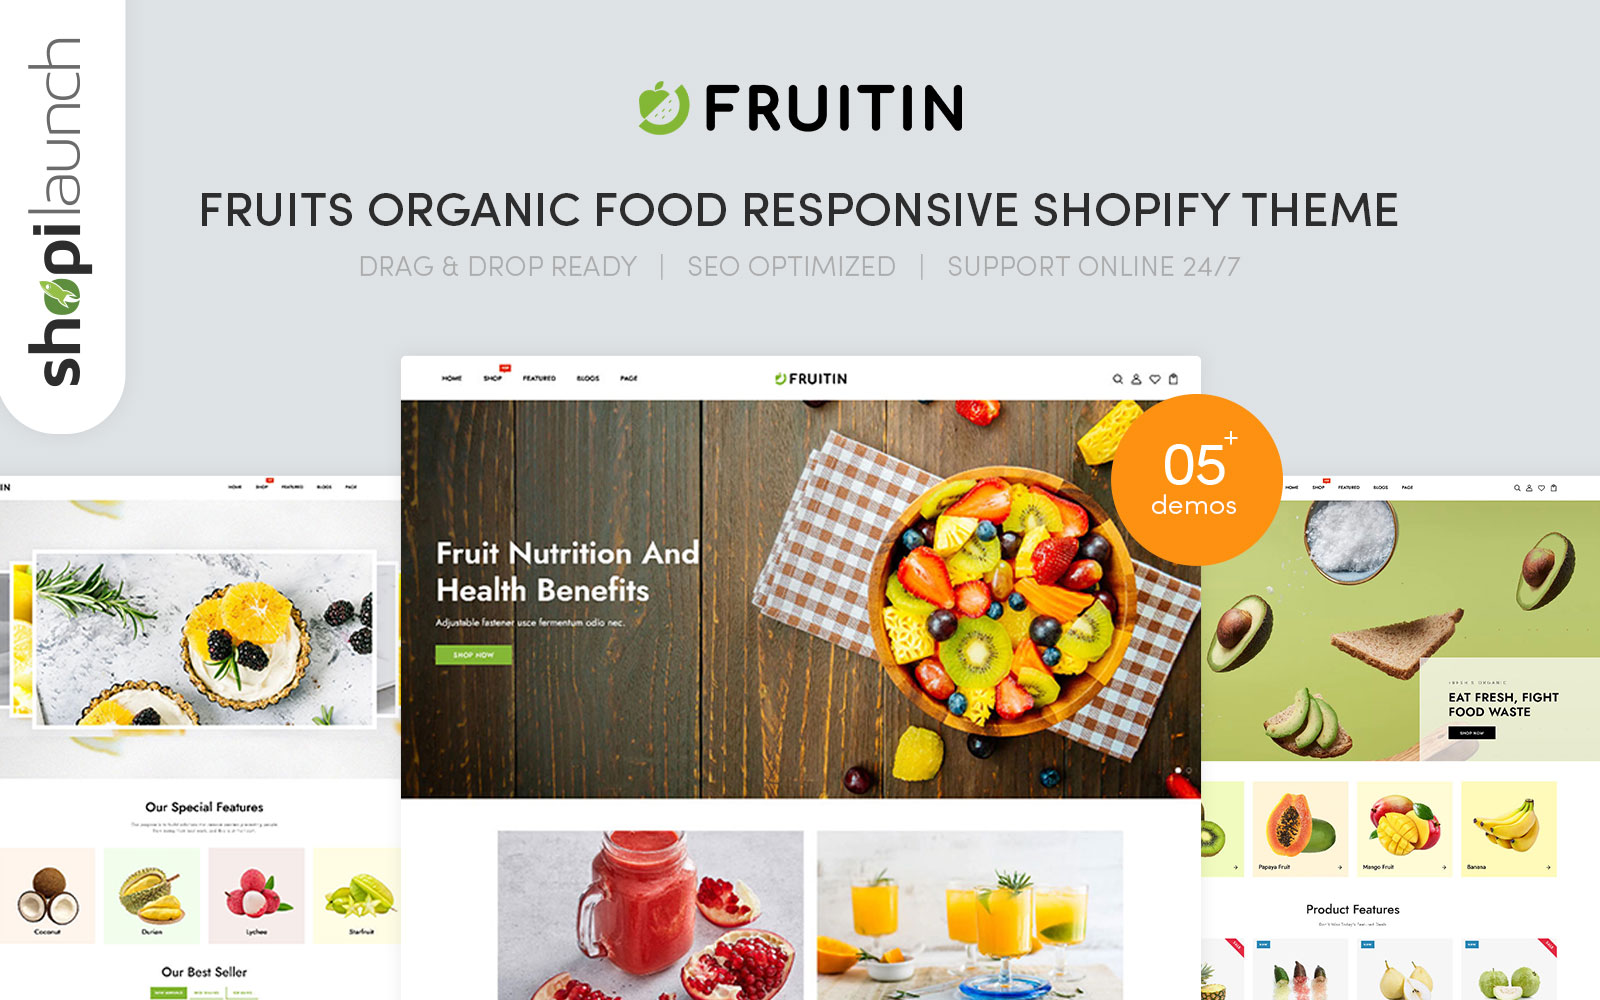 Fruitini - Fruits Organic Food Responsive Shopify Theme